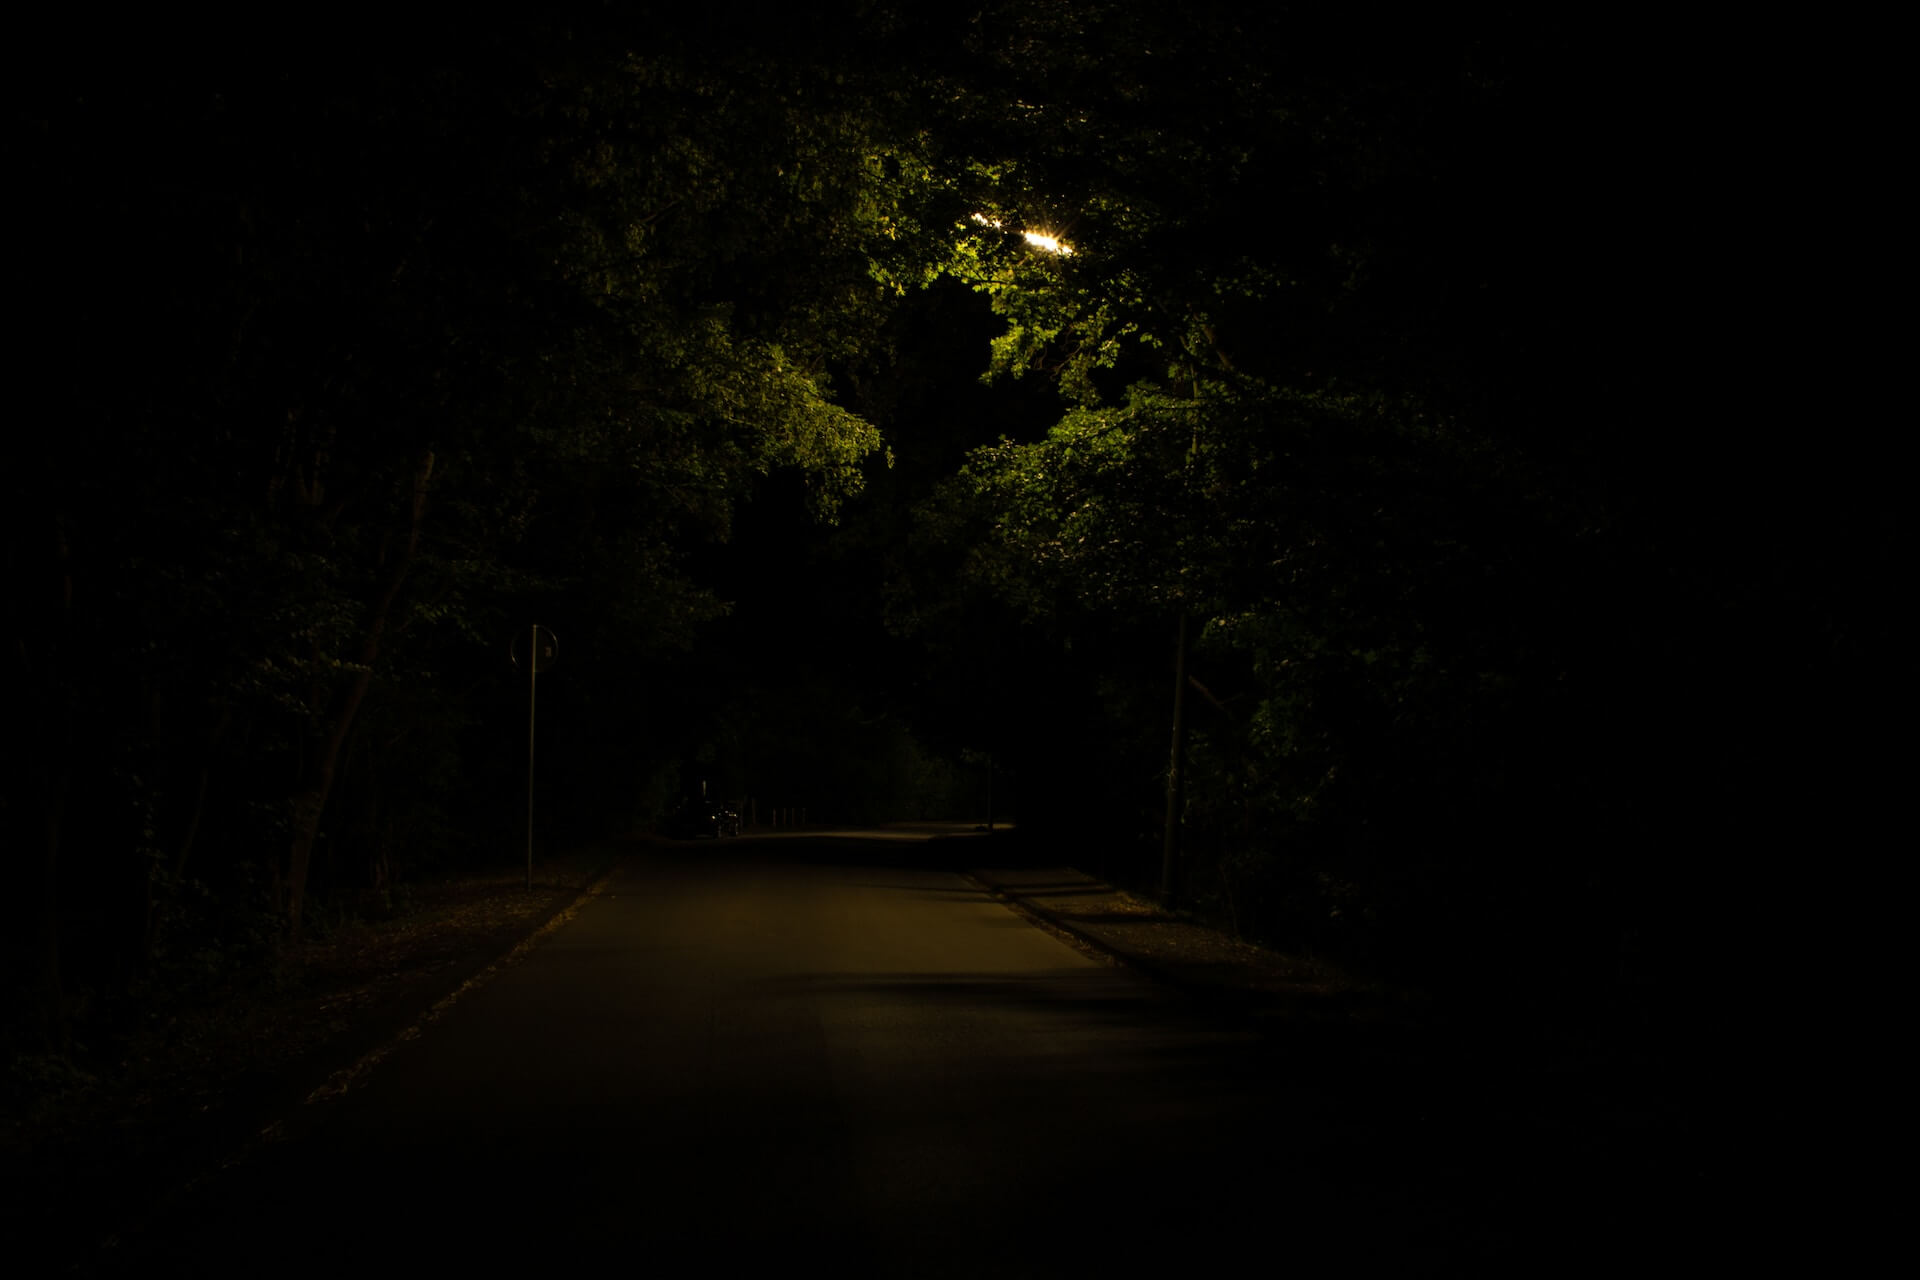 A poorly lit road